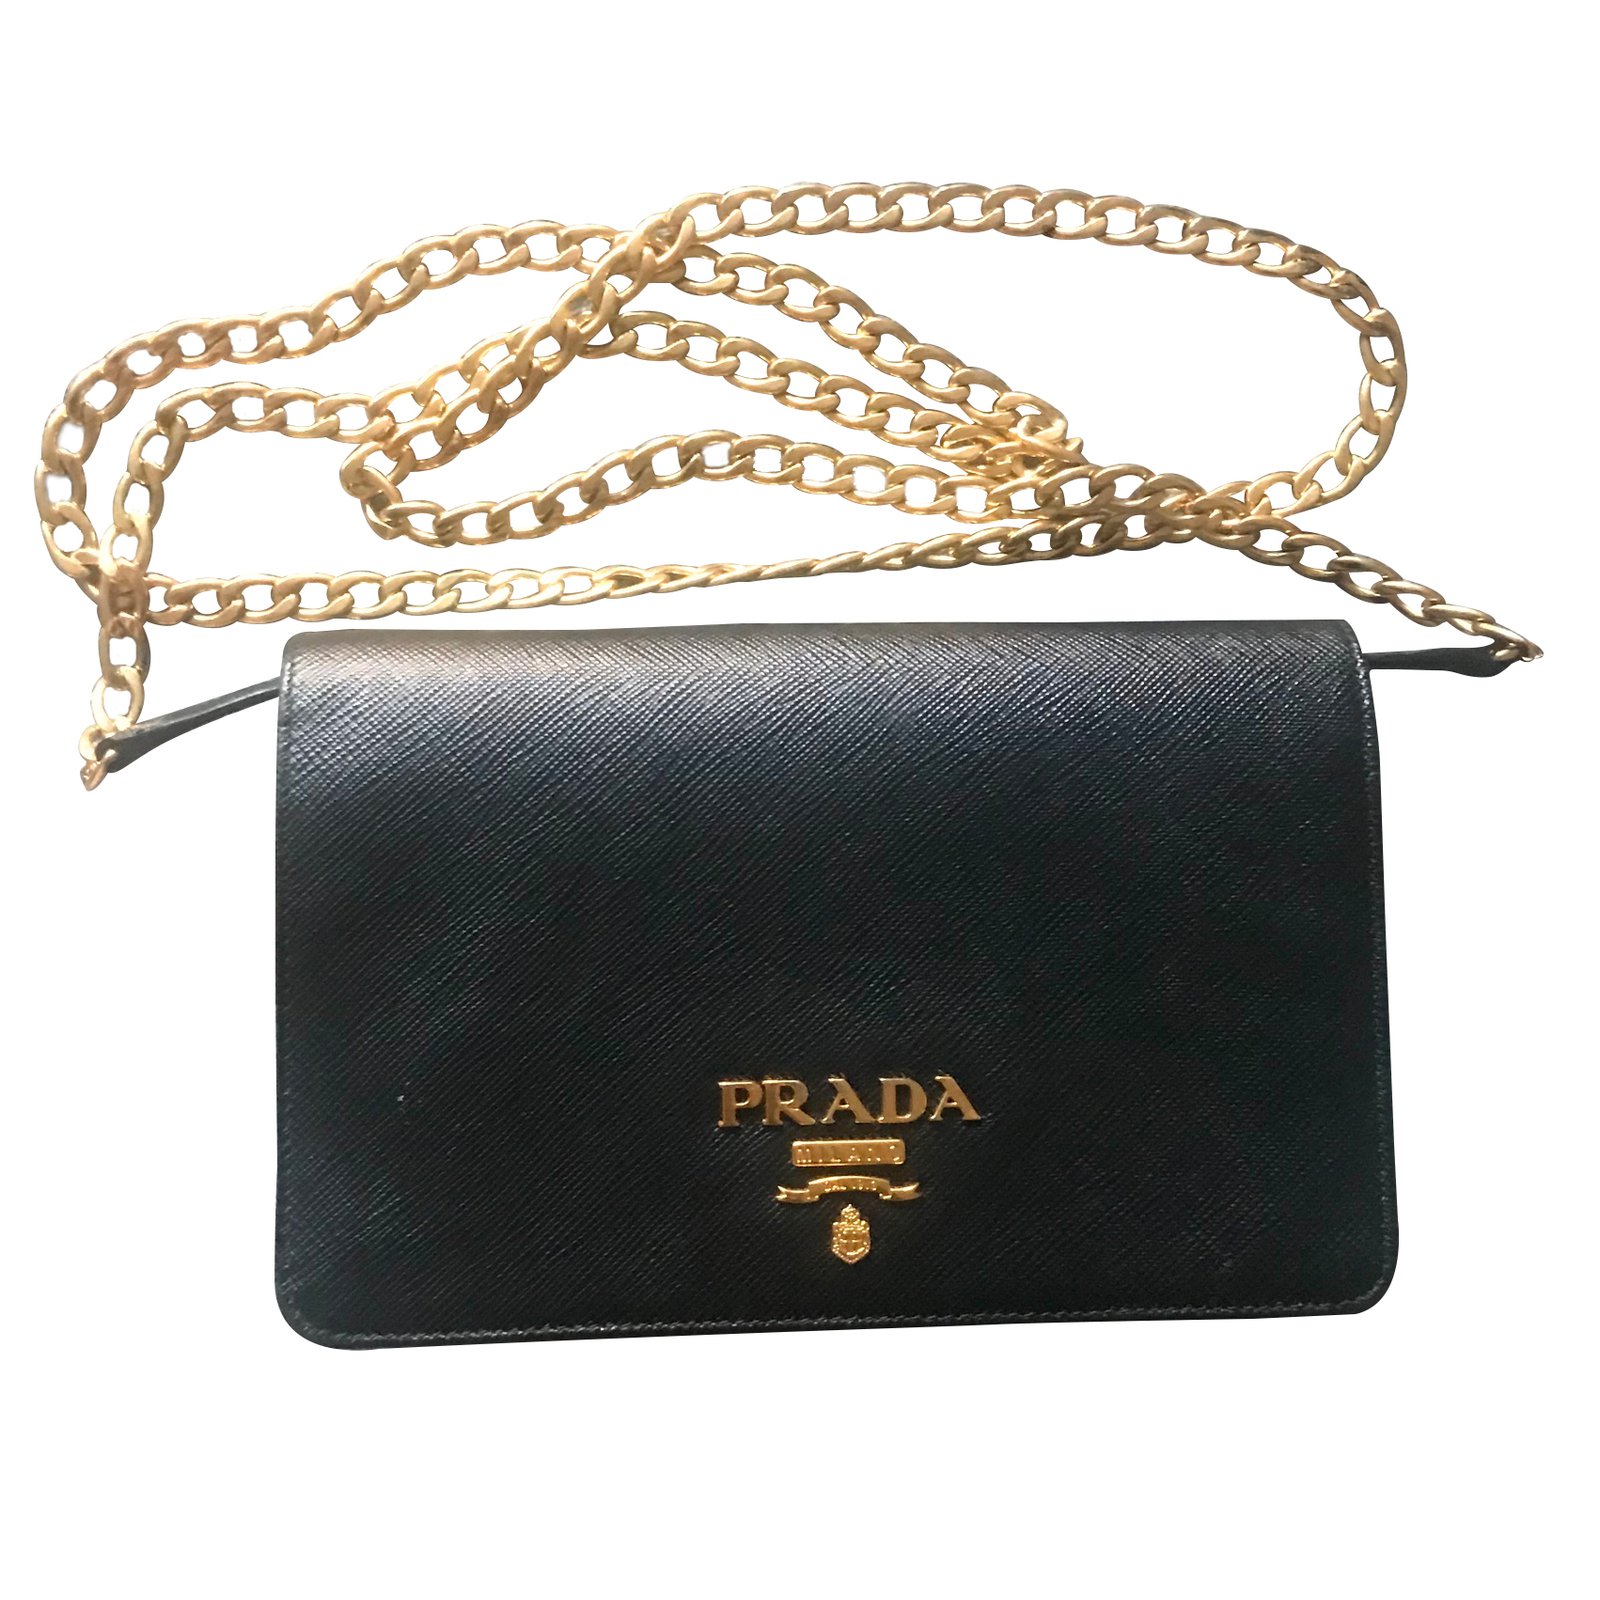 saffiano leather shoulder bag prada price